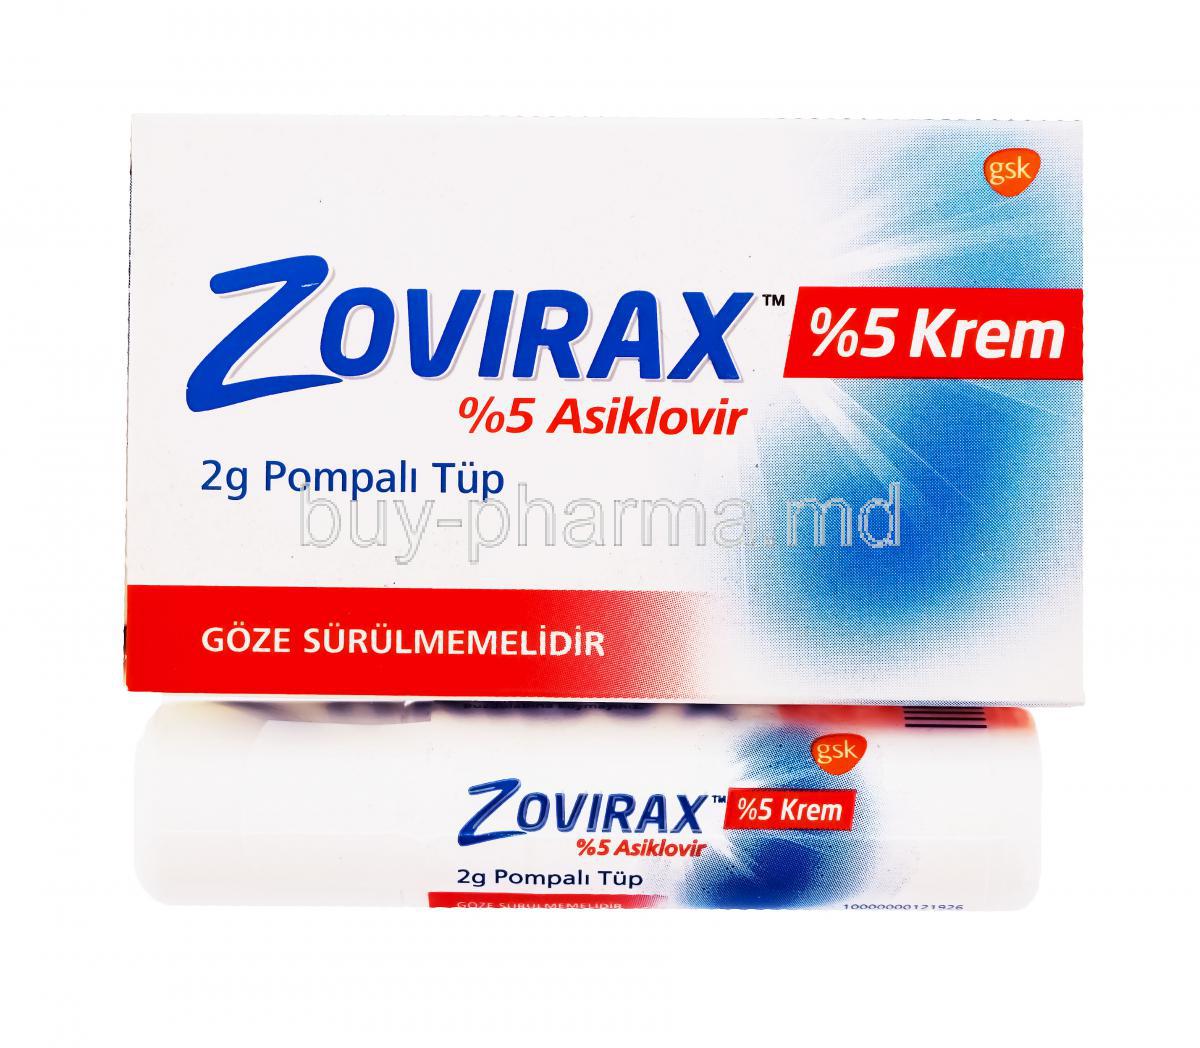 Zovirax Eye Ointment, 2g 5% asiklovir, box and tube front presentation, GSK